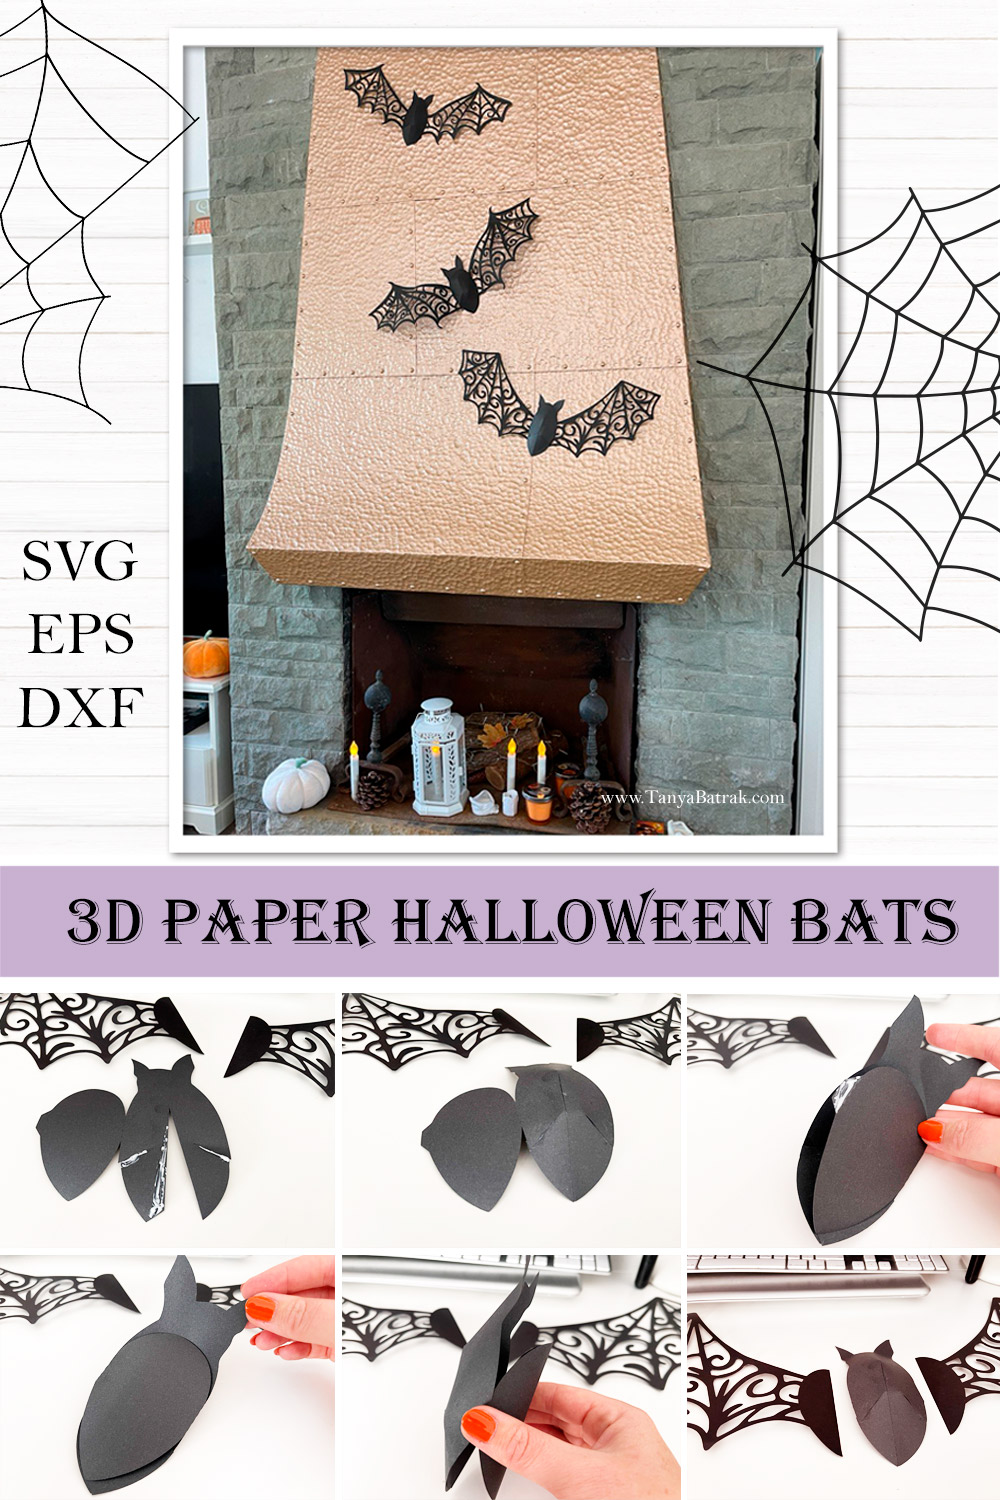 DIY Halloween Decorations Free SVG Silhouette Studio cut files